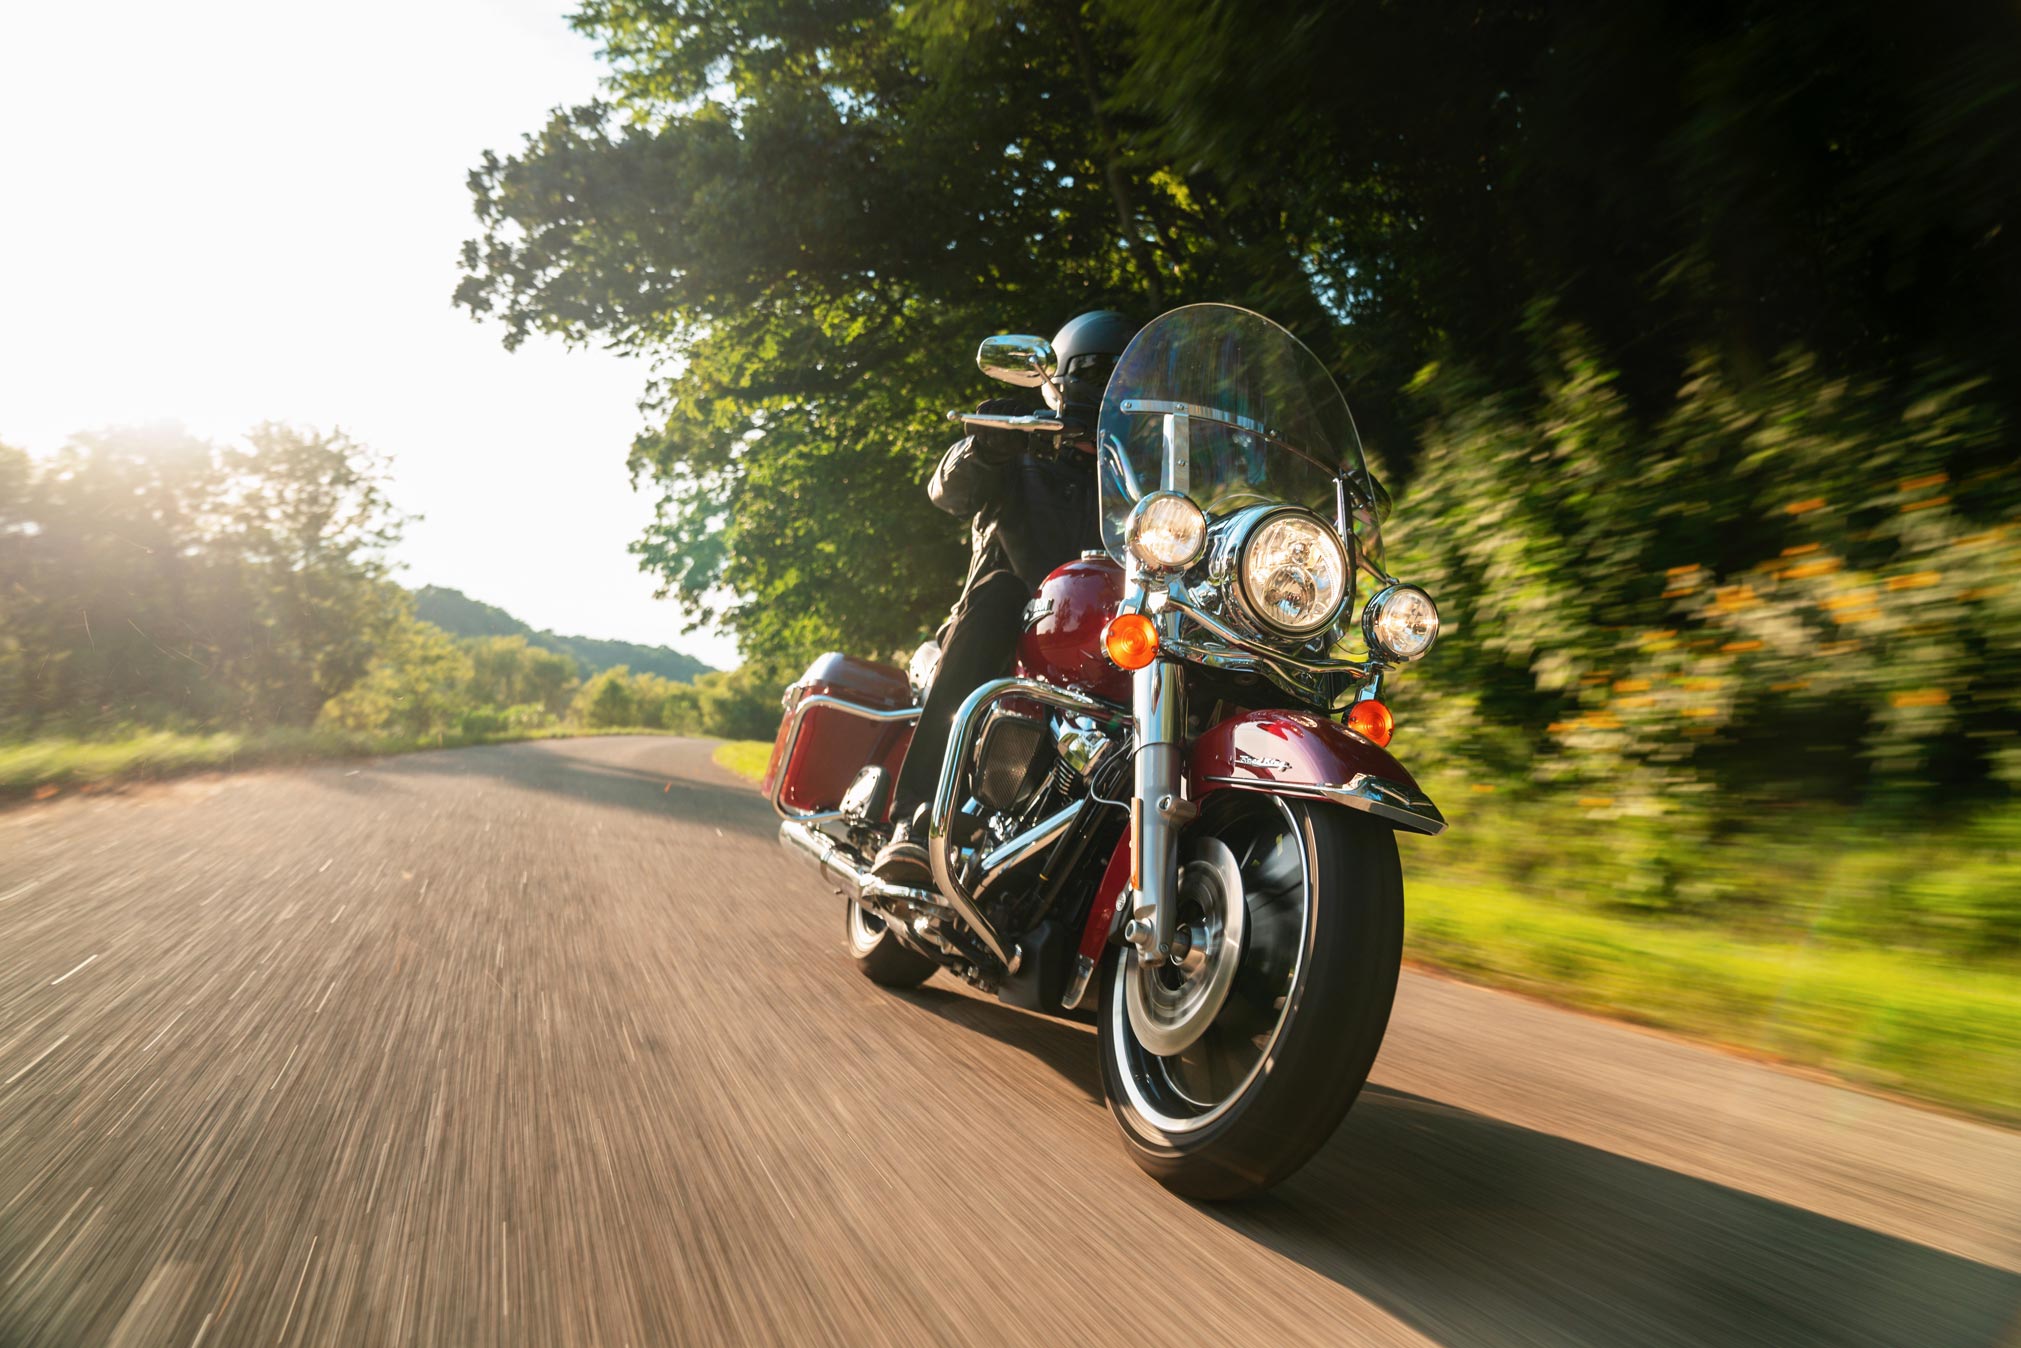 2021 Harley-Davidson Road King Guide • Total Motorcycle